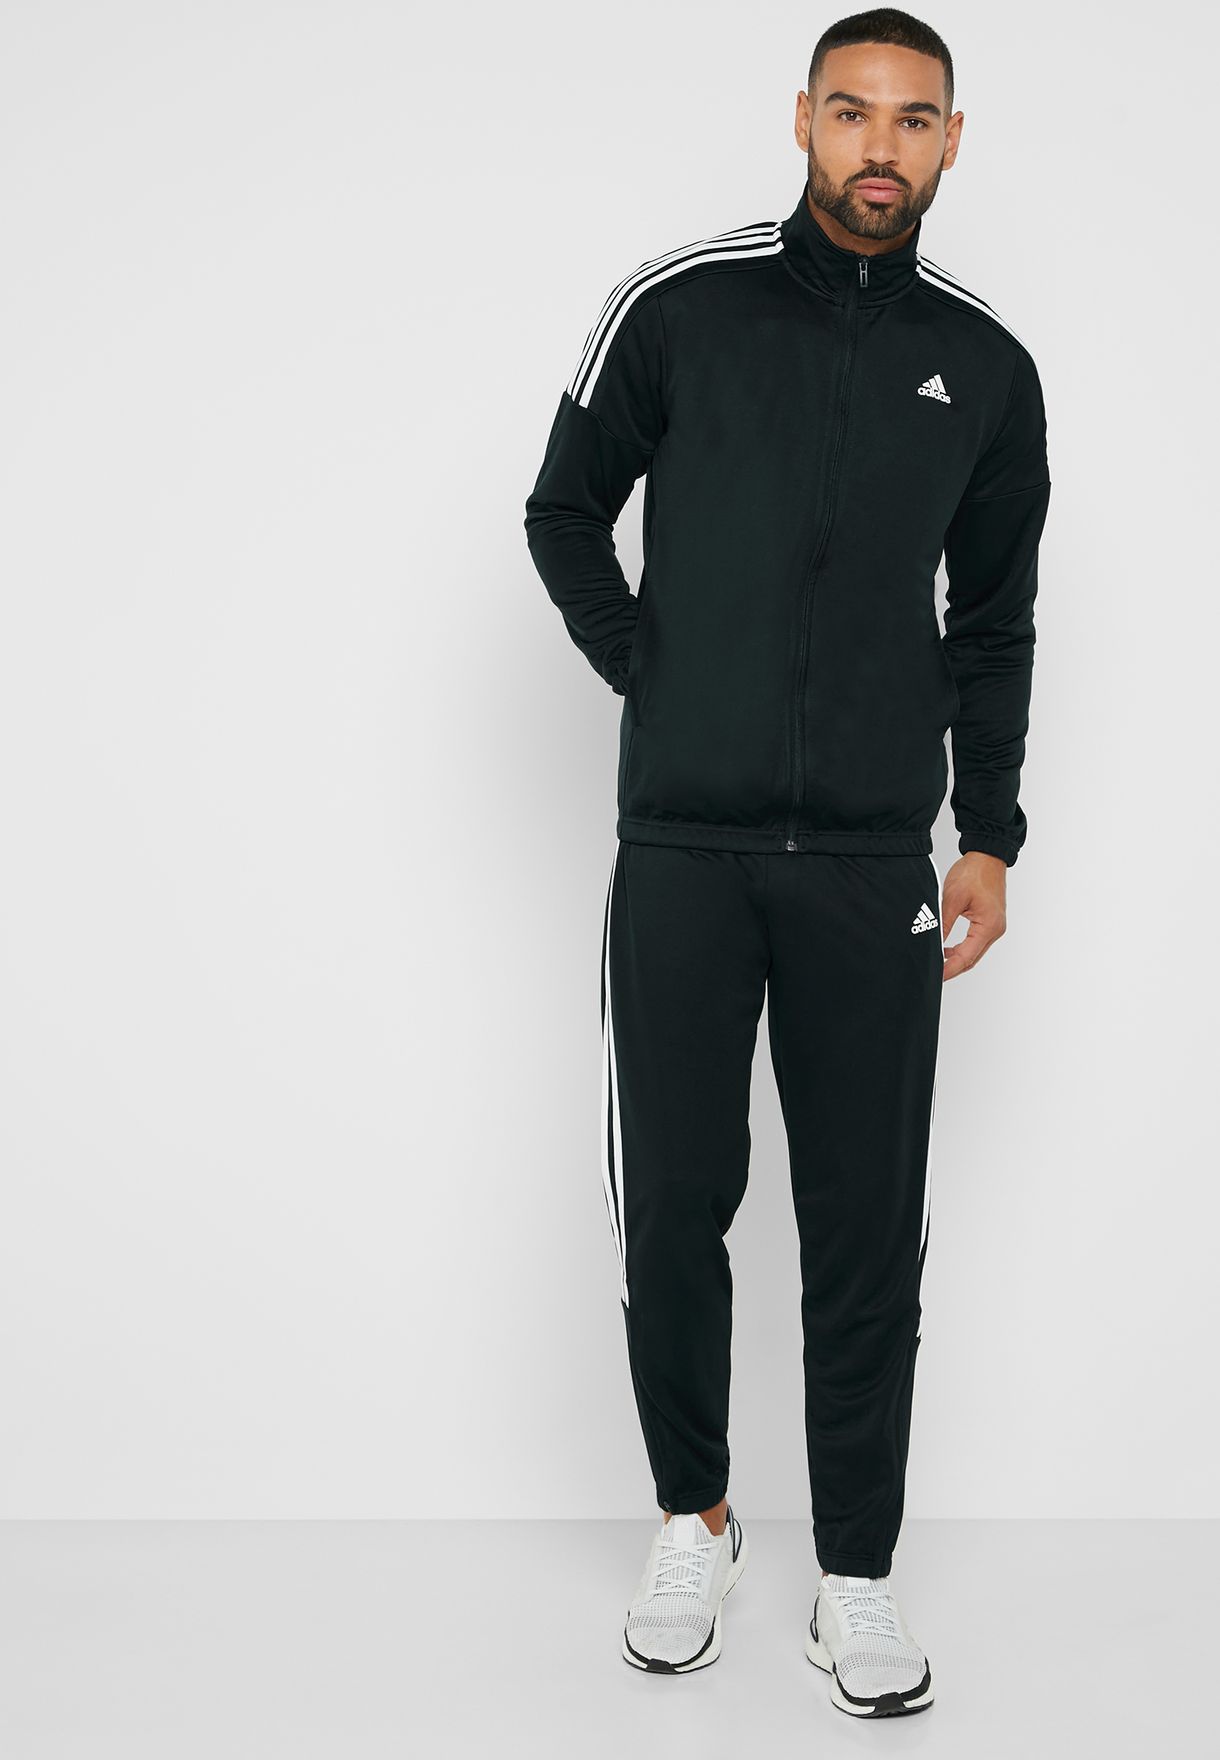 adidas team sports track suit